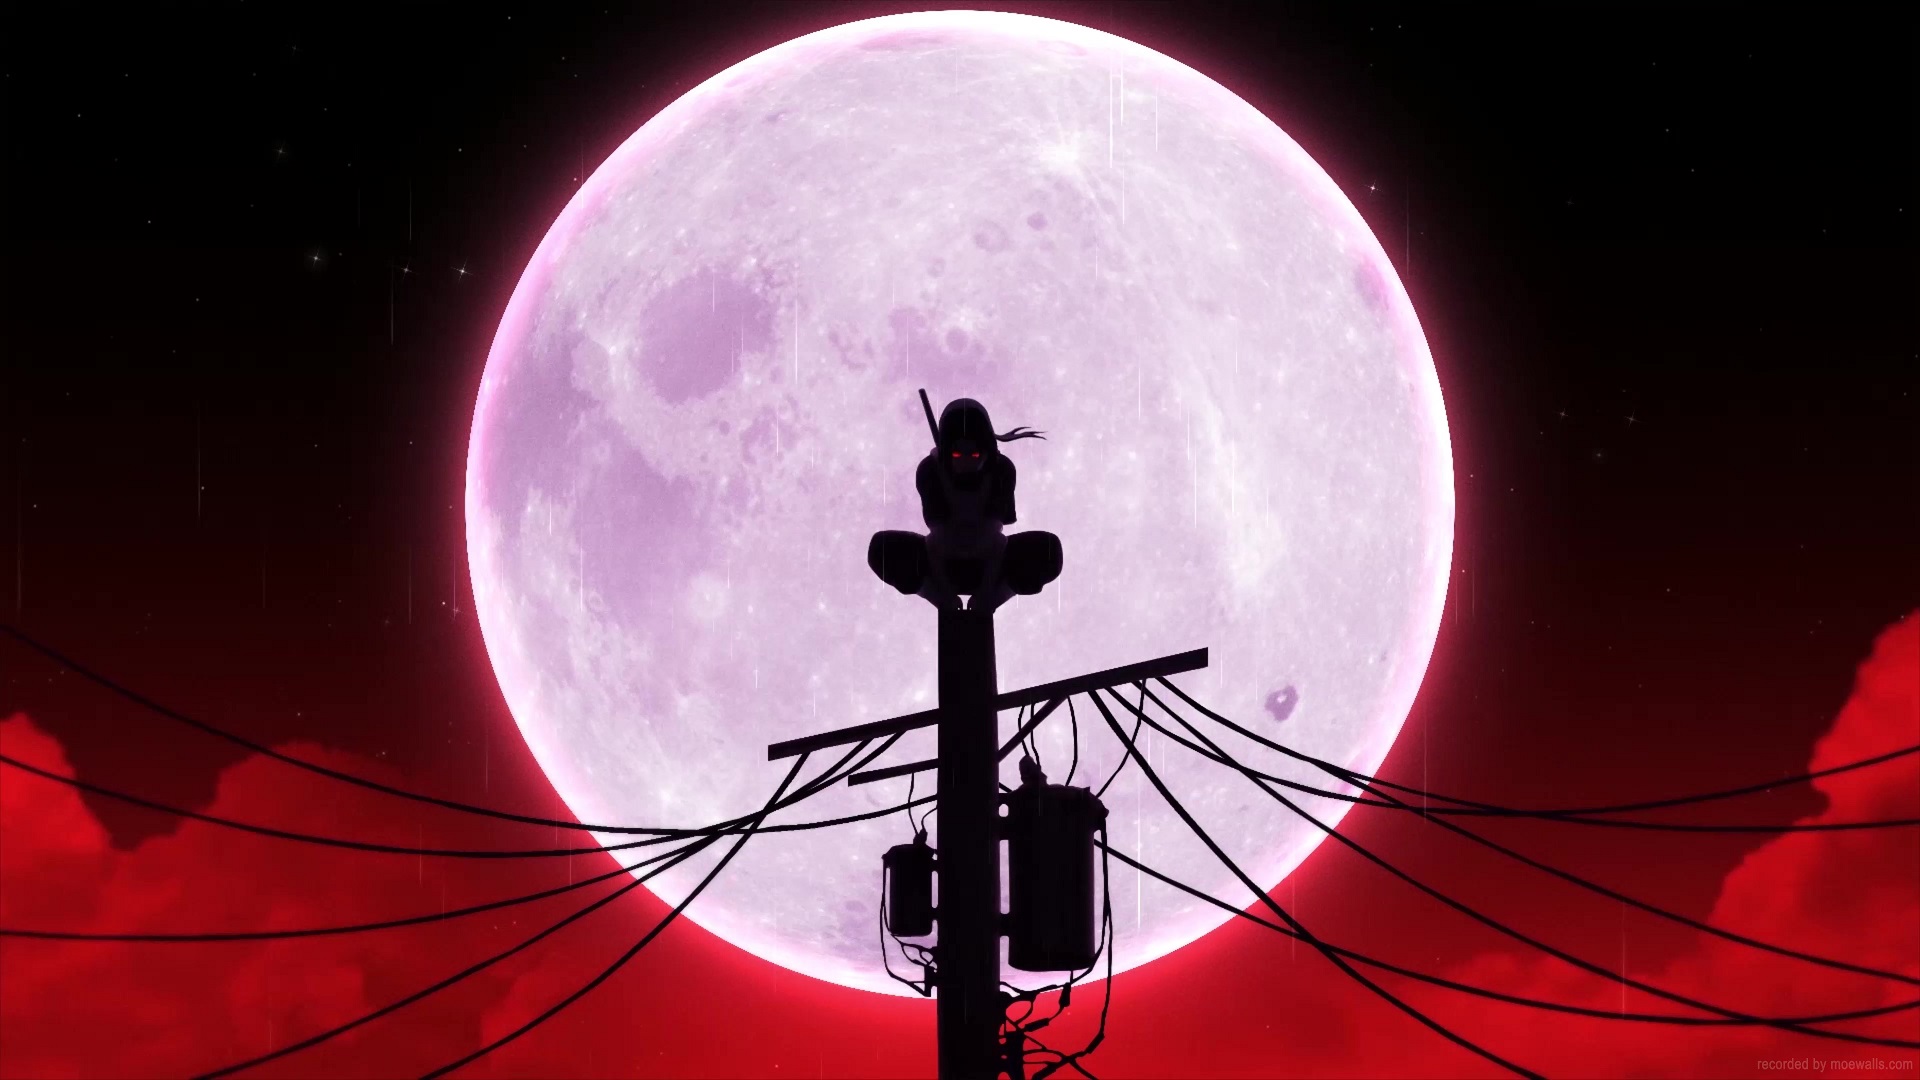 Itachi Uchiha Blood Moon Naruto Shippuden Live Wallpaper - MoeWalls